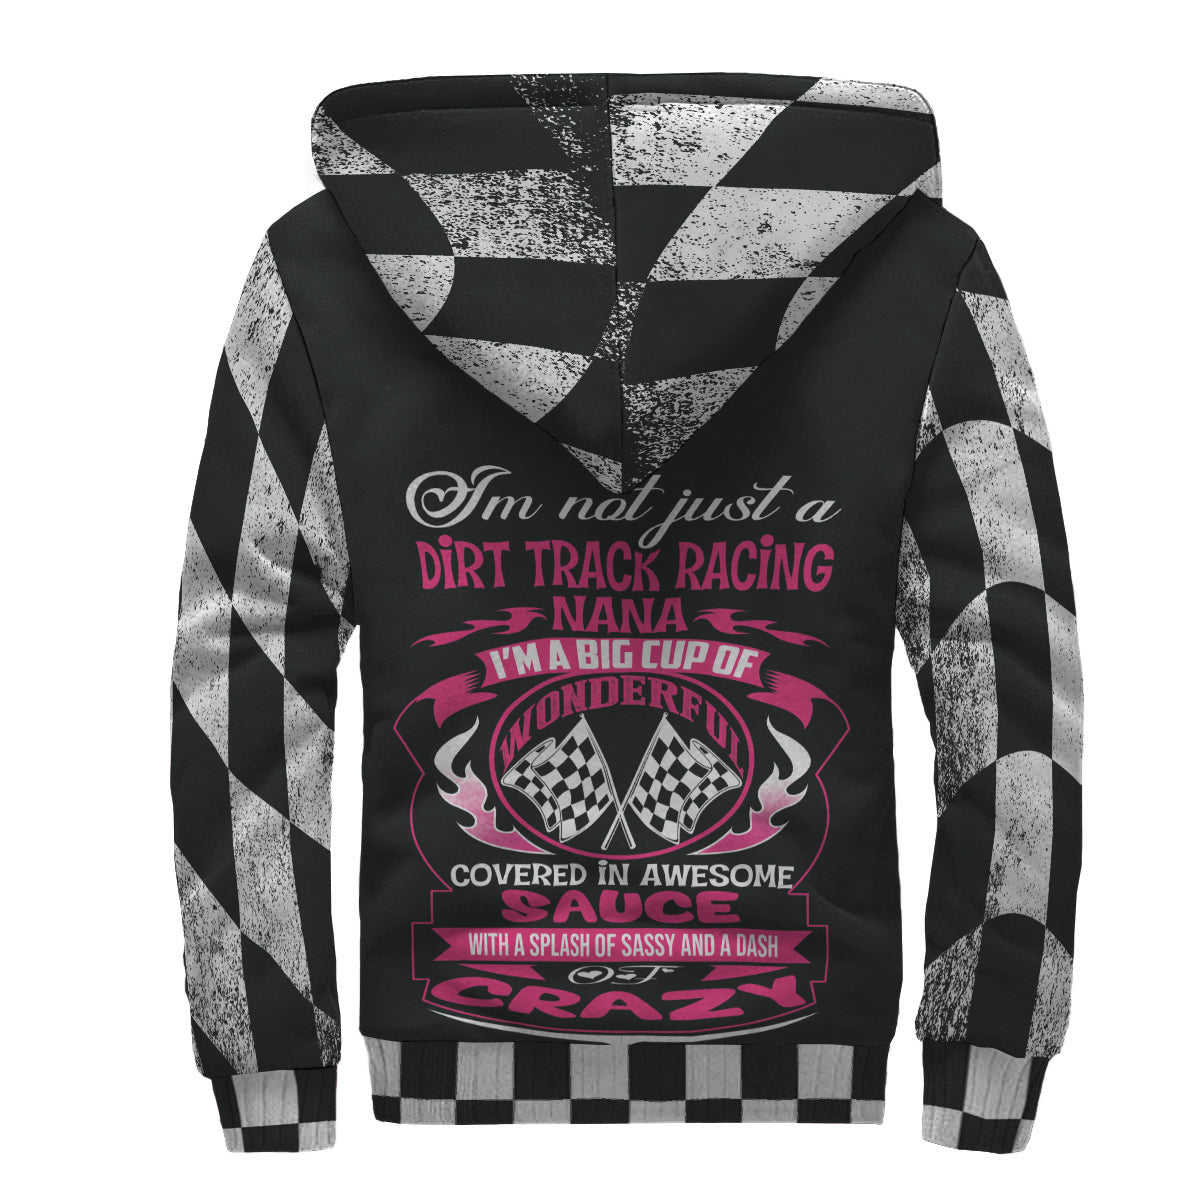 dirt track racing nana jacket